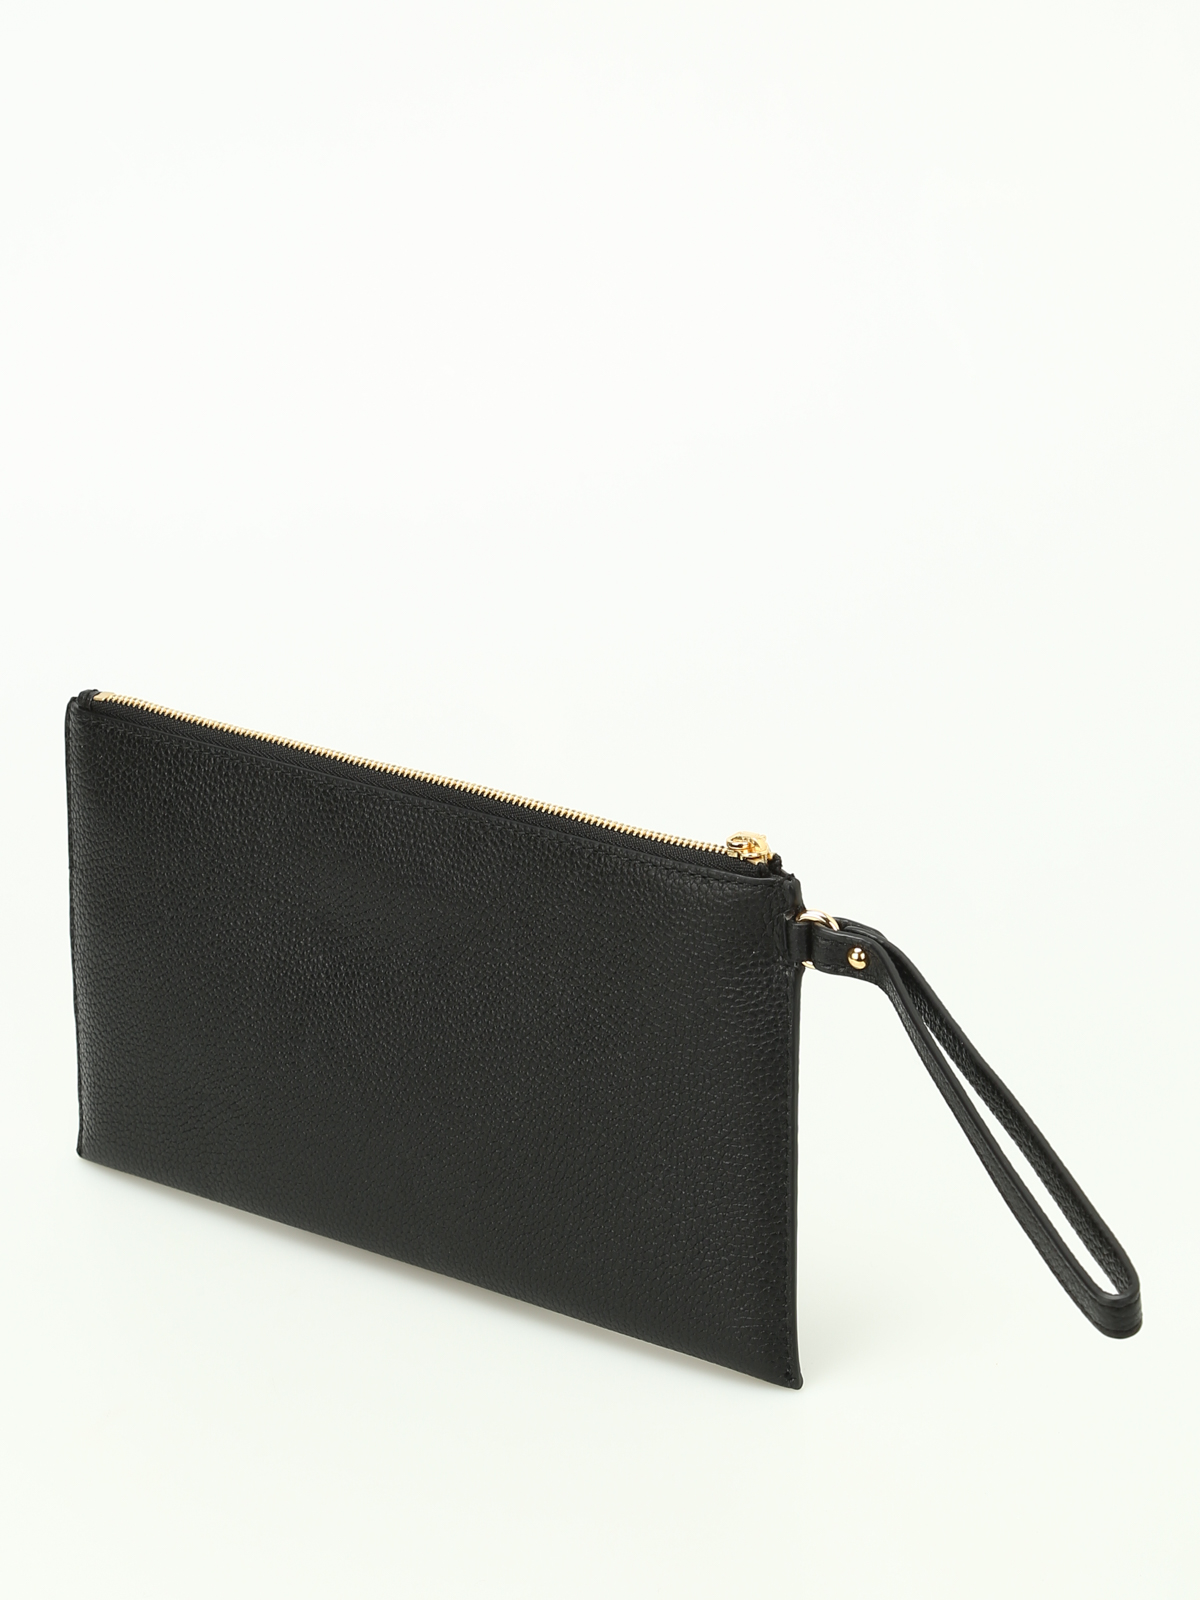 Wallets & purses Michael Kors - Wristlet black flat purse